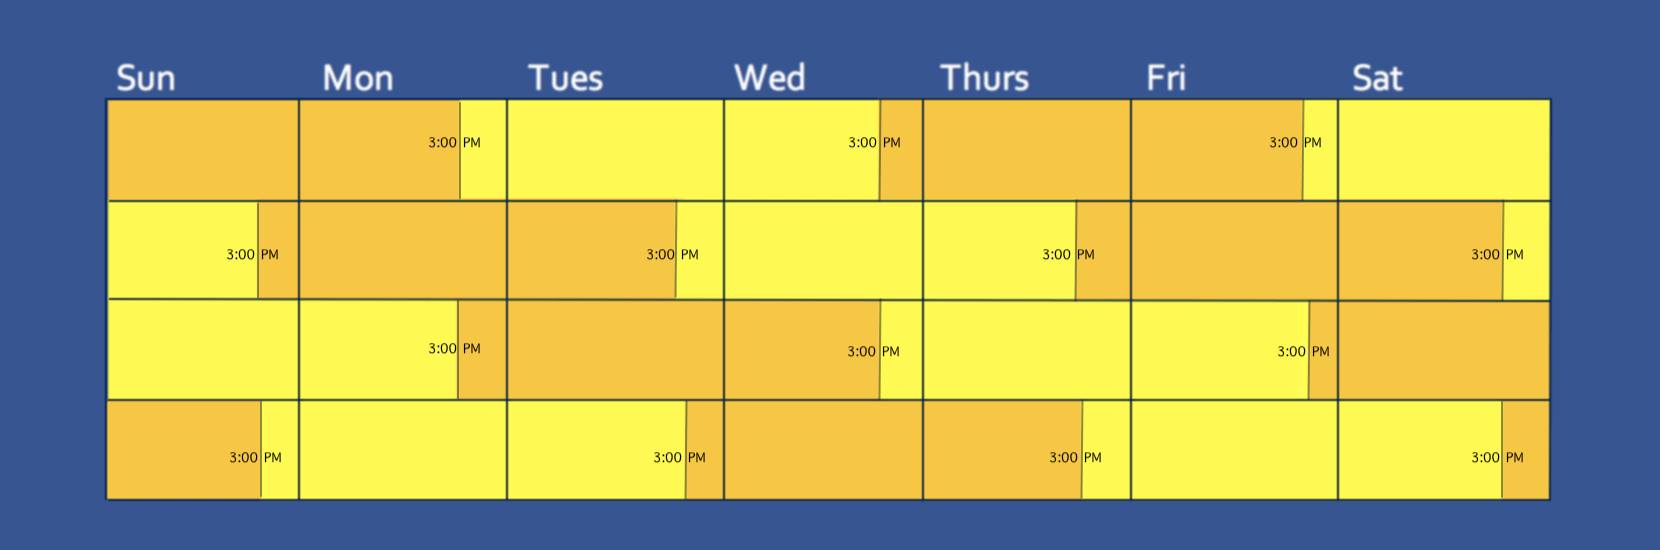 Split Custody Schedule: Alternating 2 Day Split